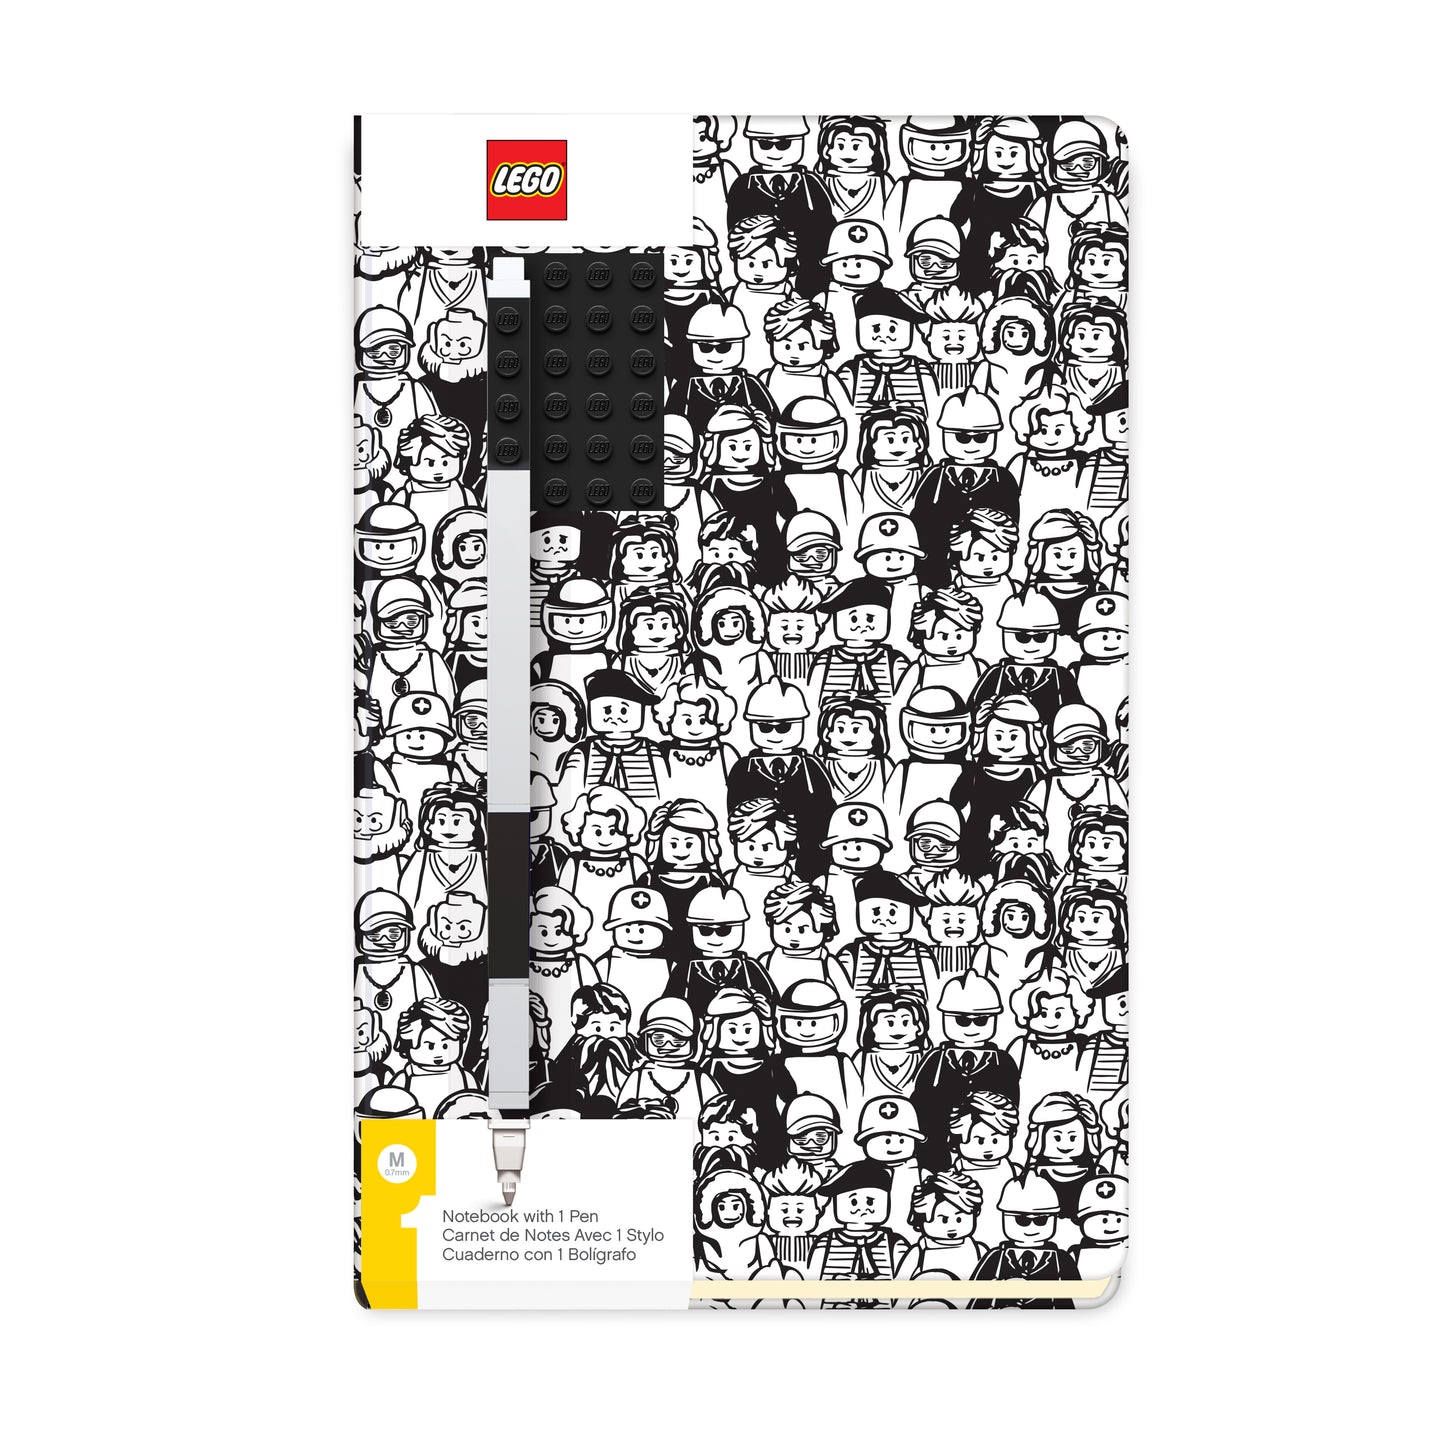 IQ レゴ 2.0シリーズ 文房具 ミニフィギュア 4×6ブリックノート ジェルペン付き (52379)